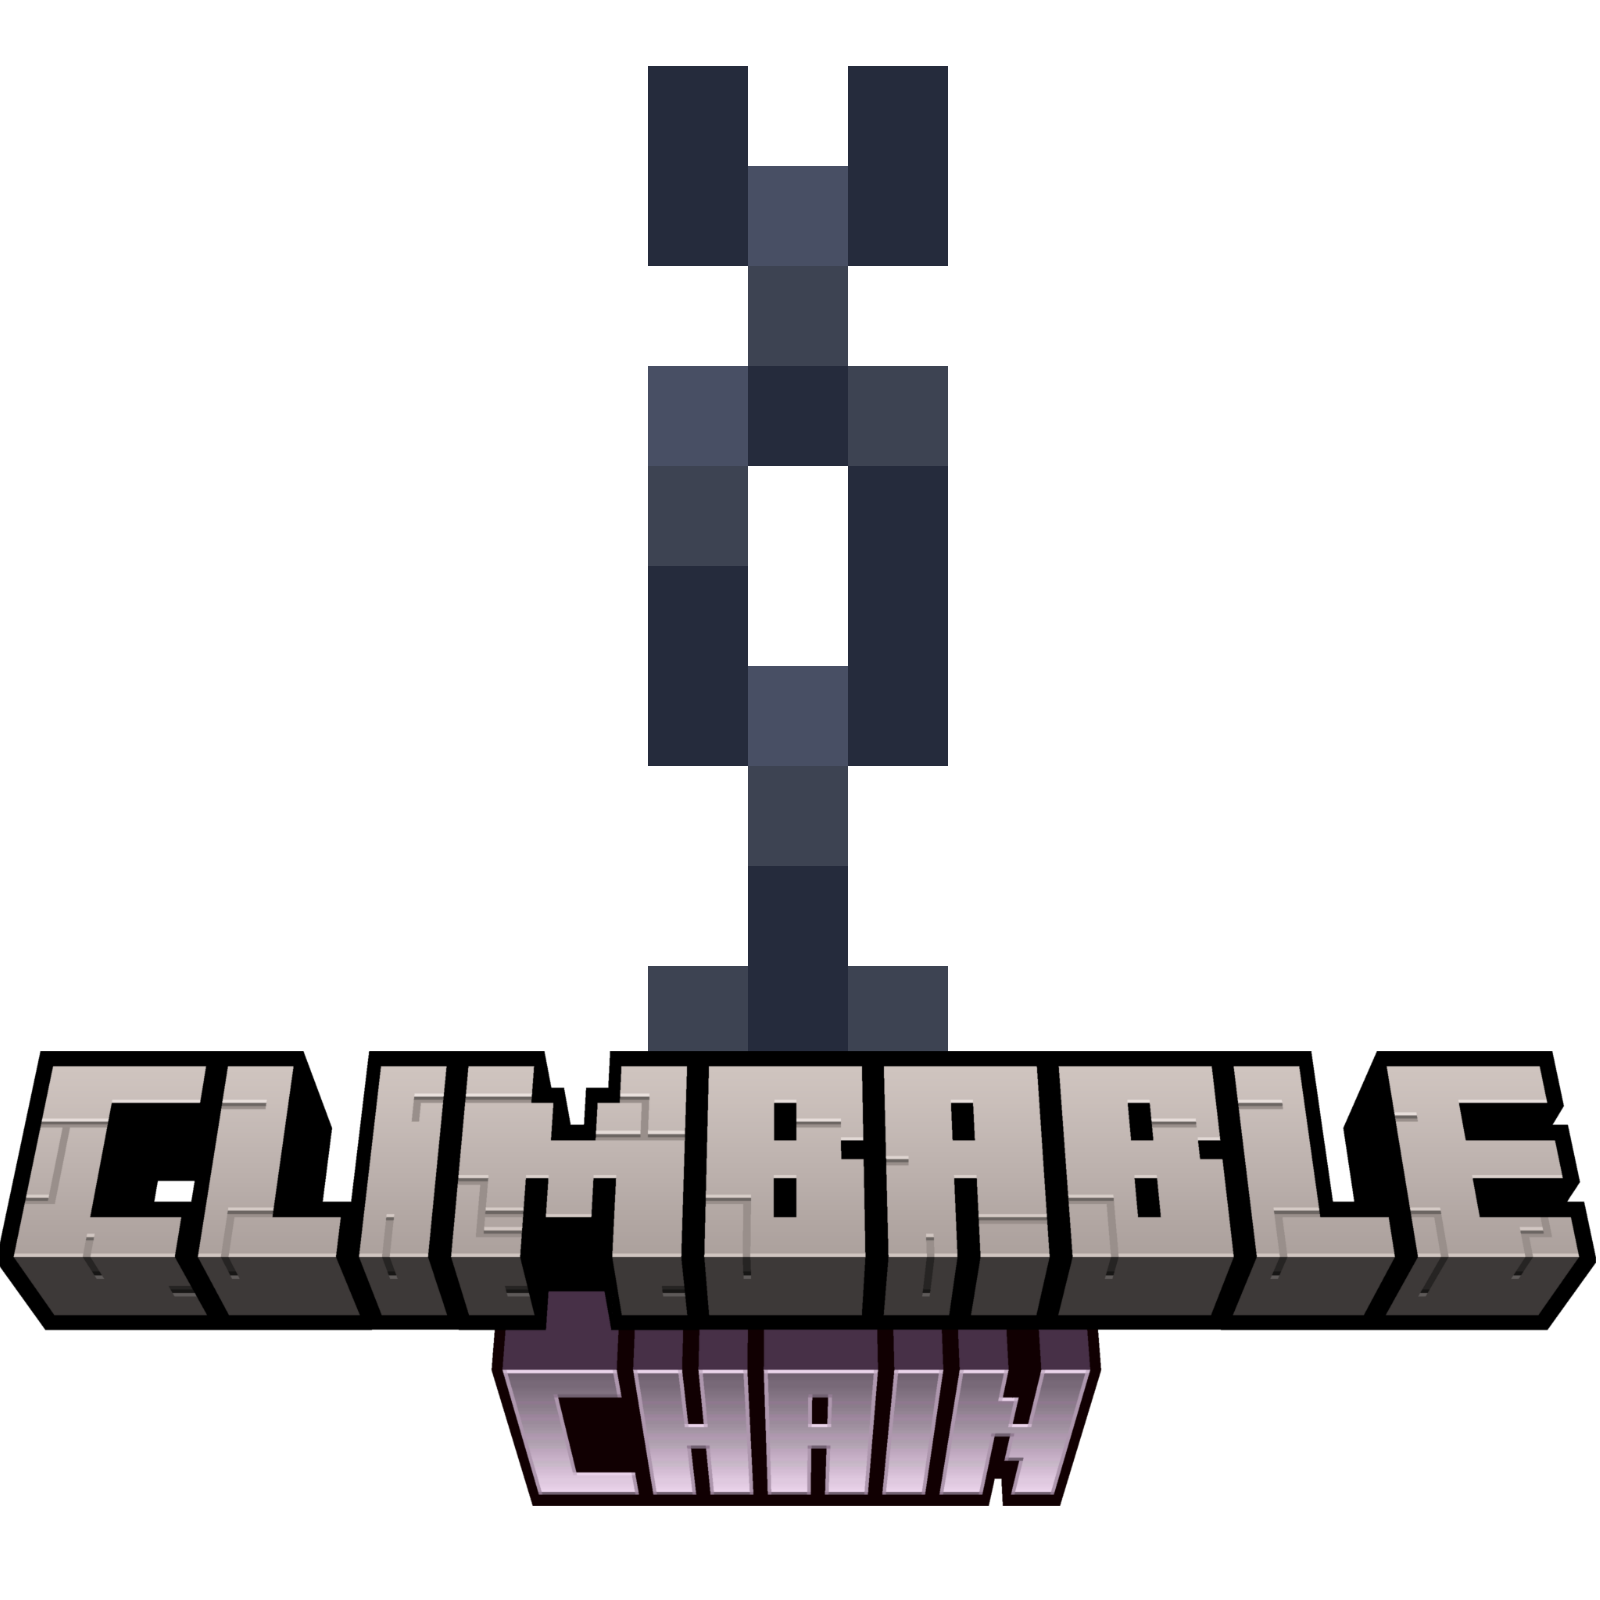 Climbable Chain